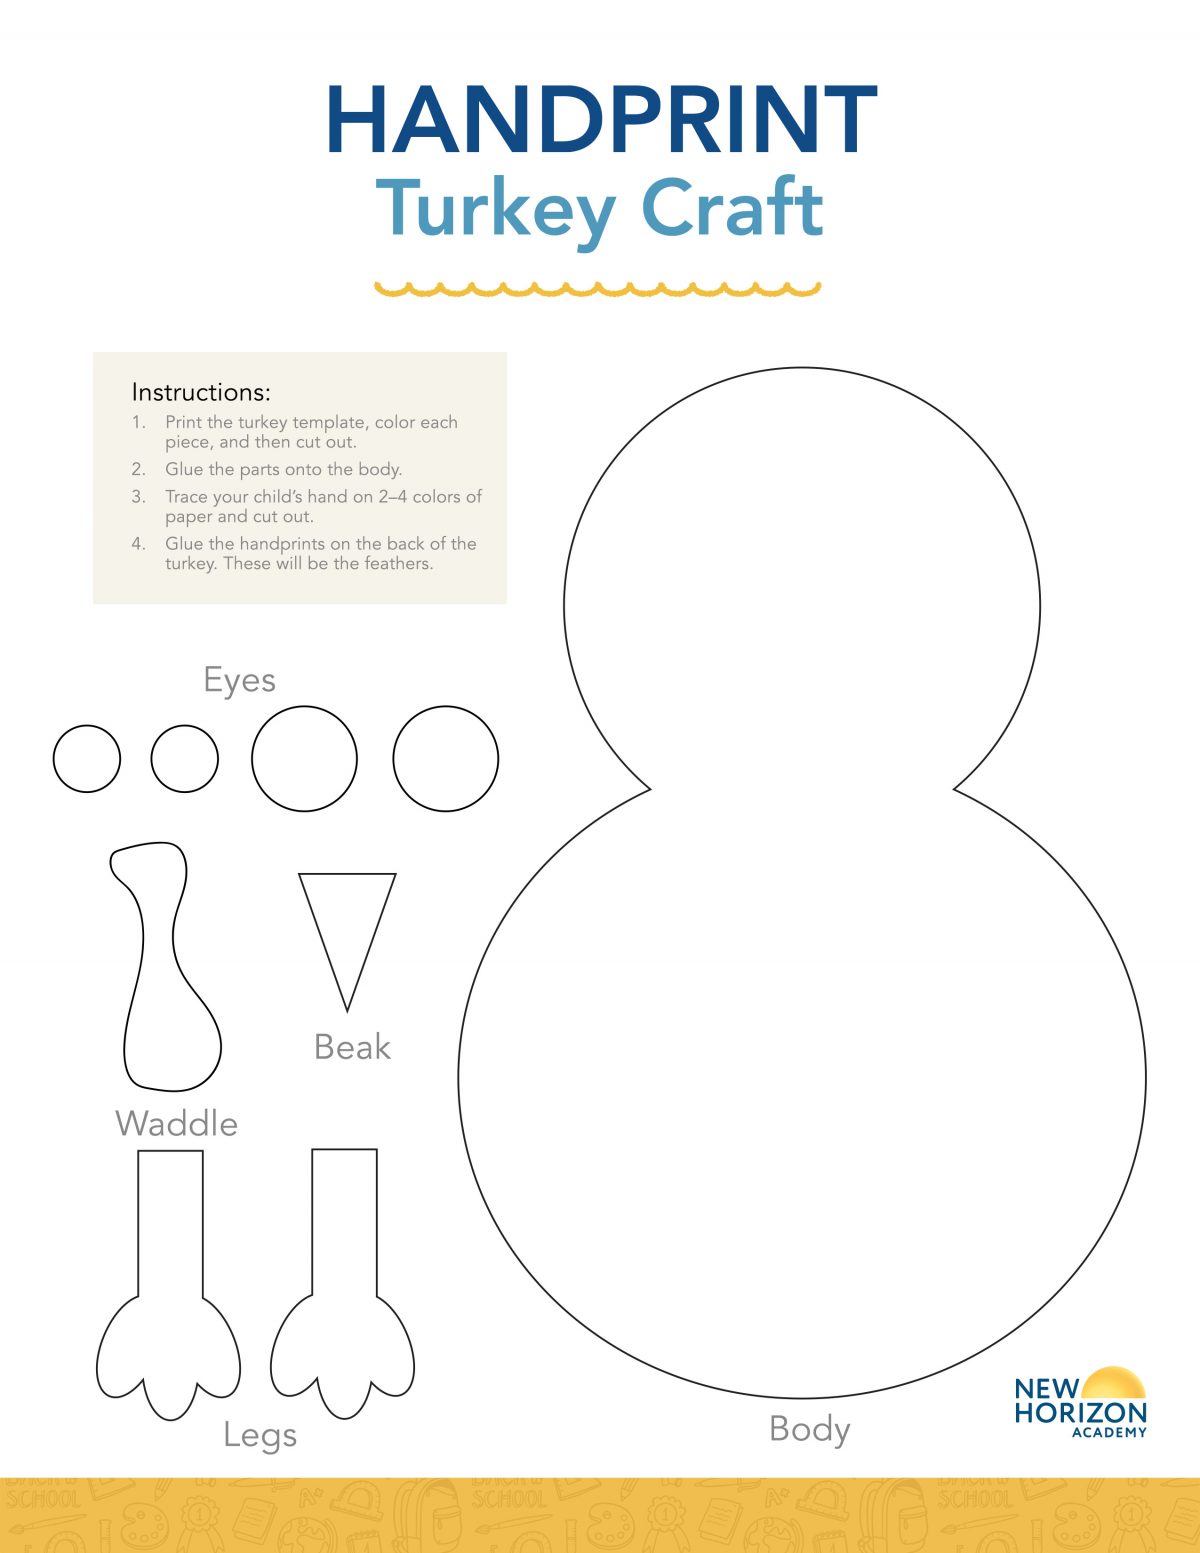 Handprint Turkey Craft template and instructions